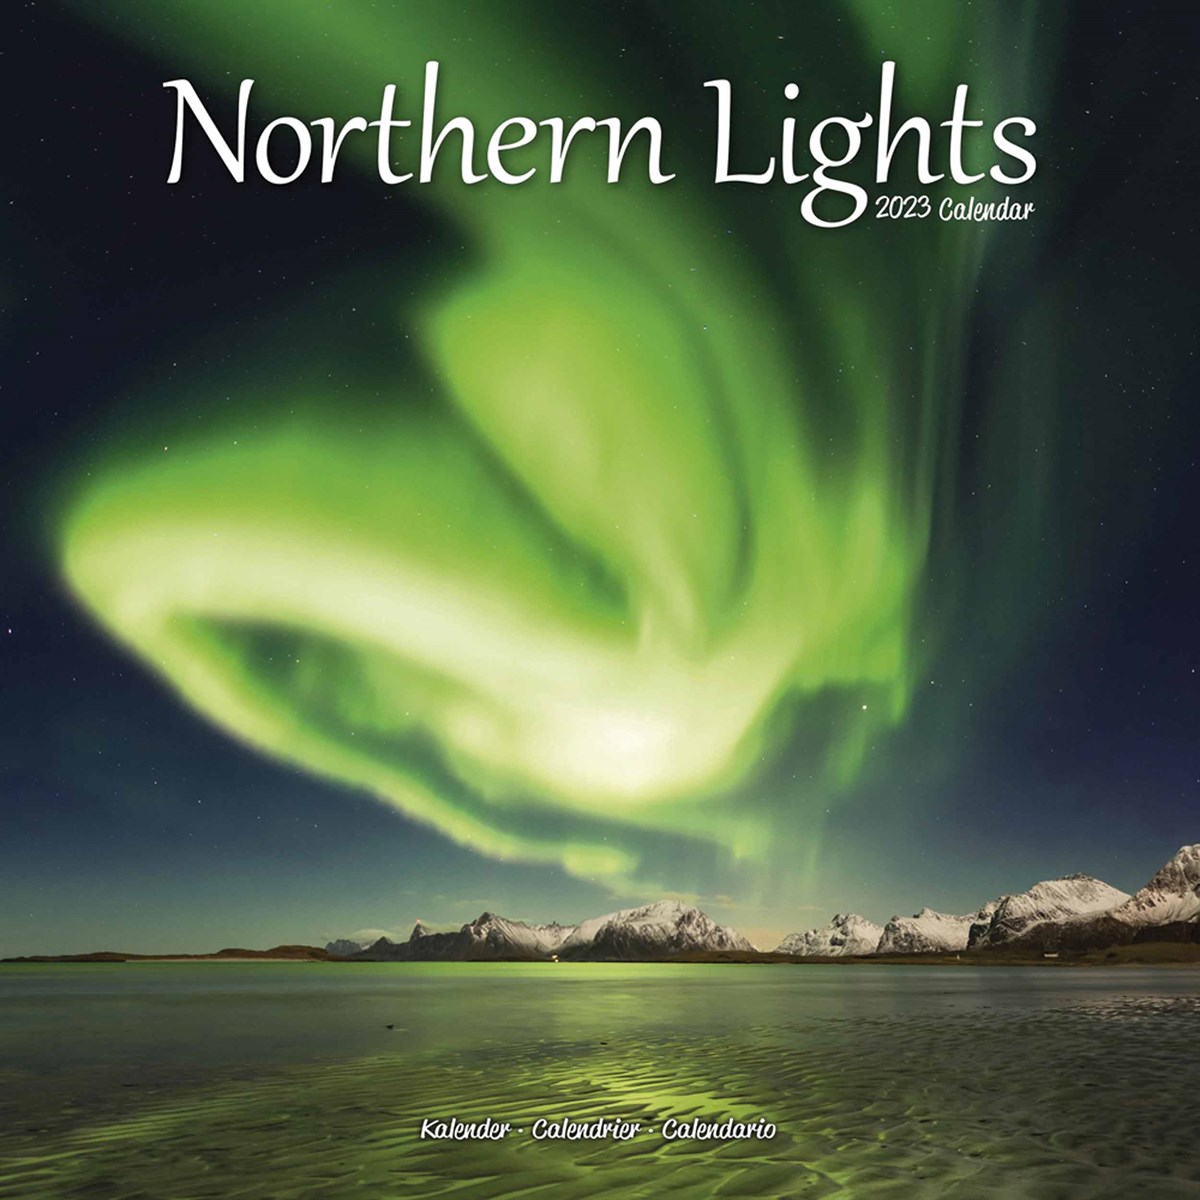 Northern Lights, Aurora Borealis 2023 Calendars